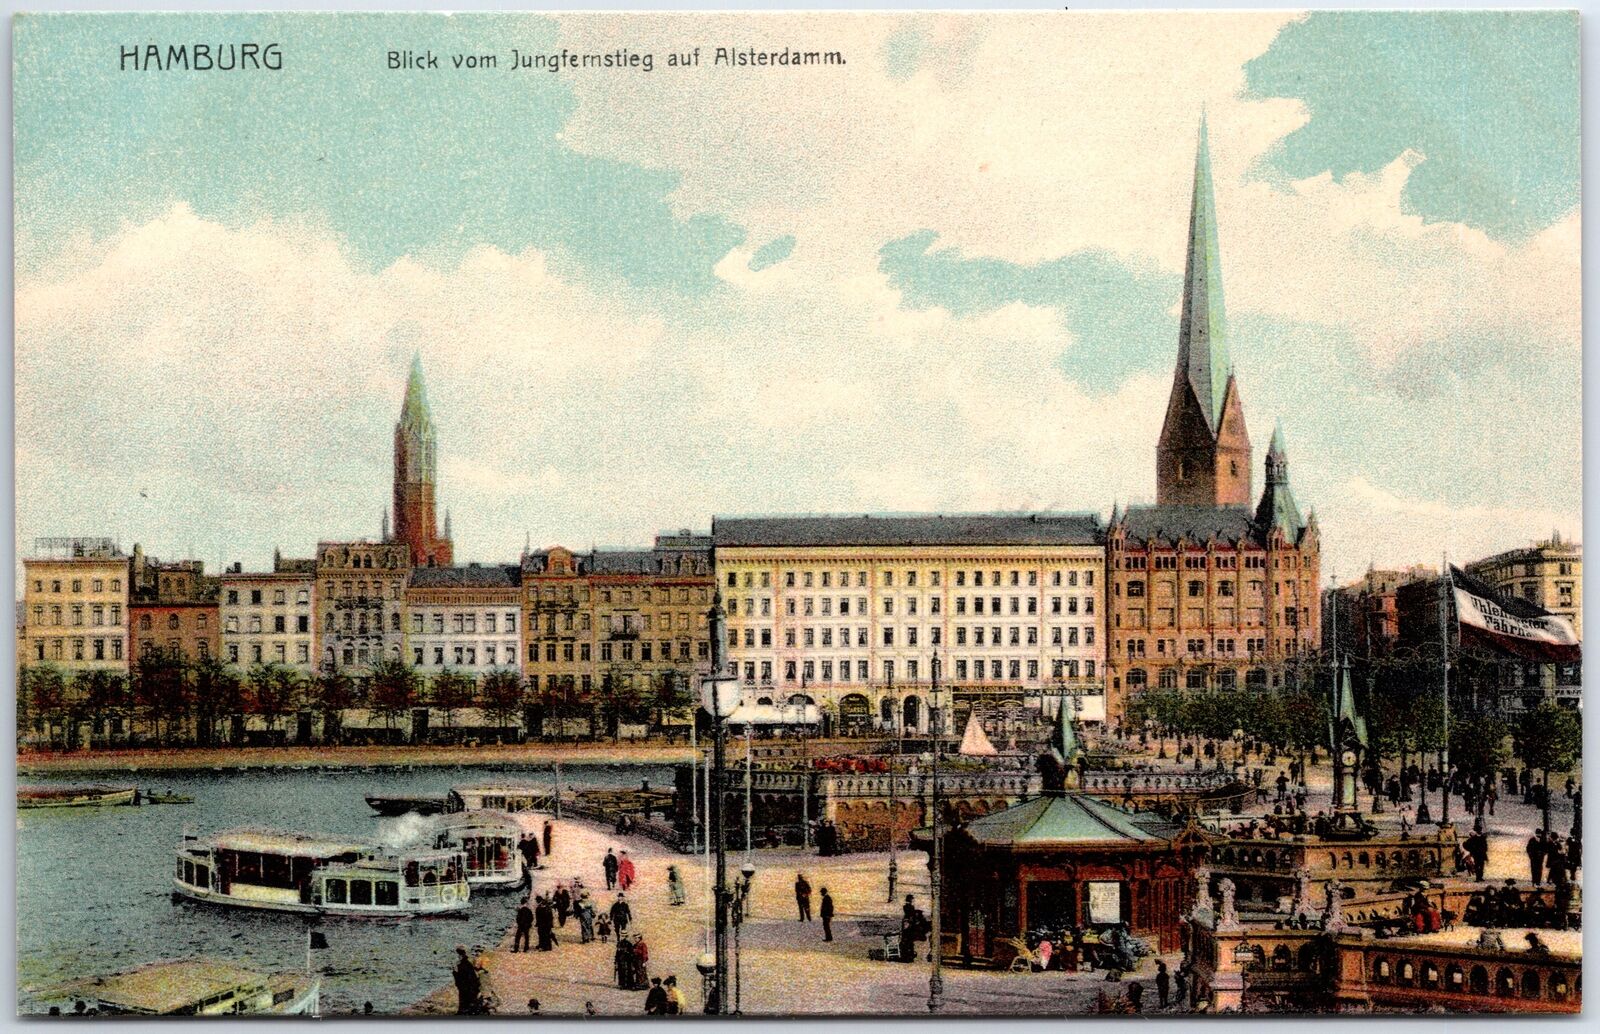 VINTAGE POSTCARD VIEW OF THE PROMENADE IN HAMBURG GERMANY c. 1907-1910